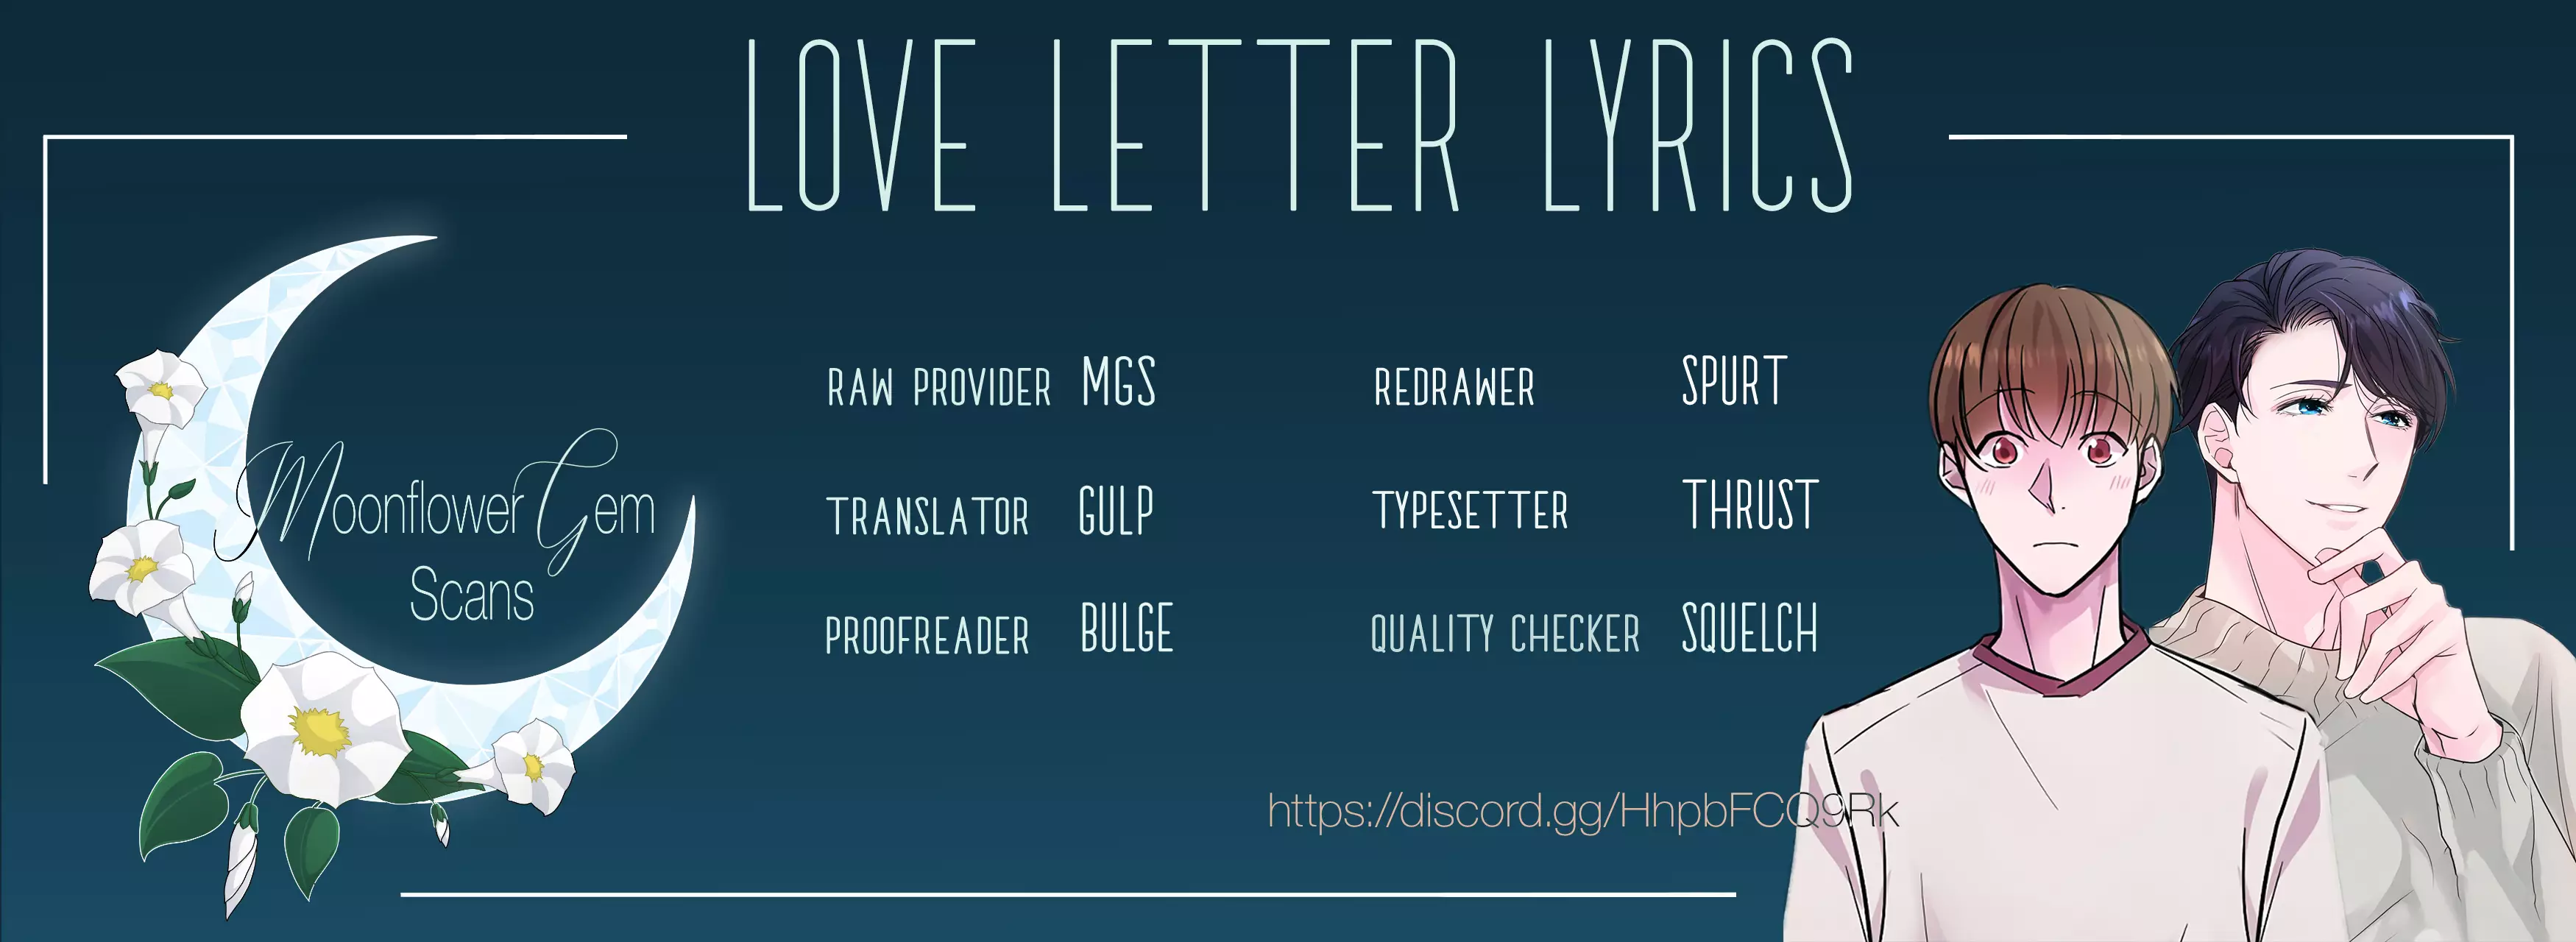 Love Letter Lyrics - 2 page 1-1772a0c1